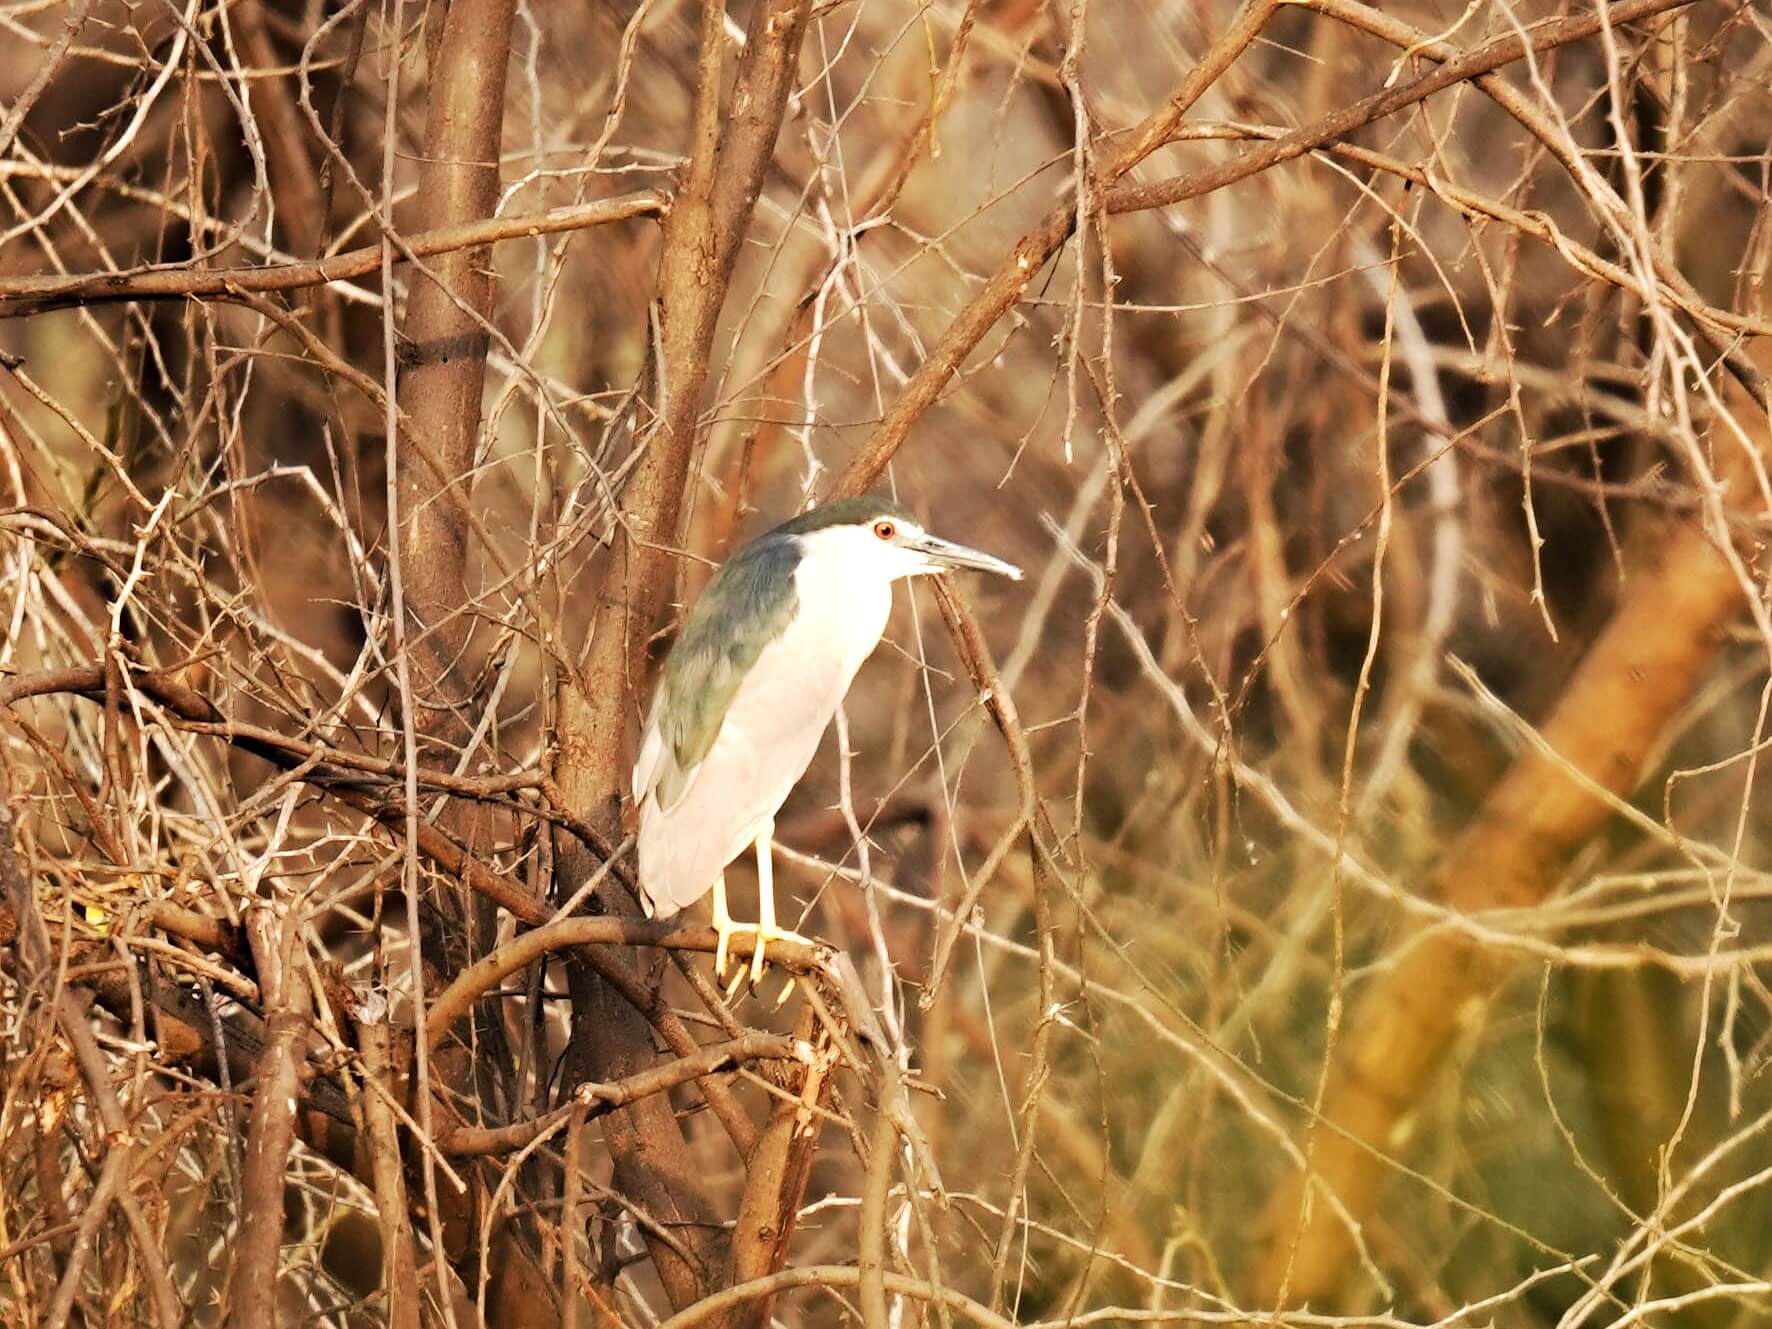 Vellode Bird Sanctuary